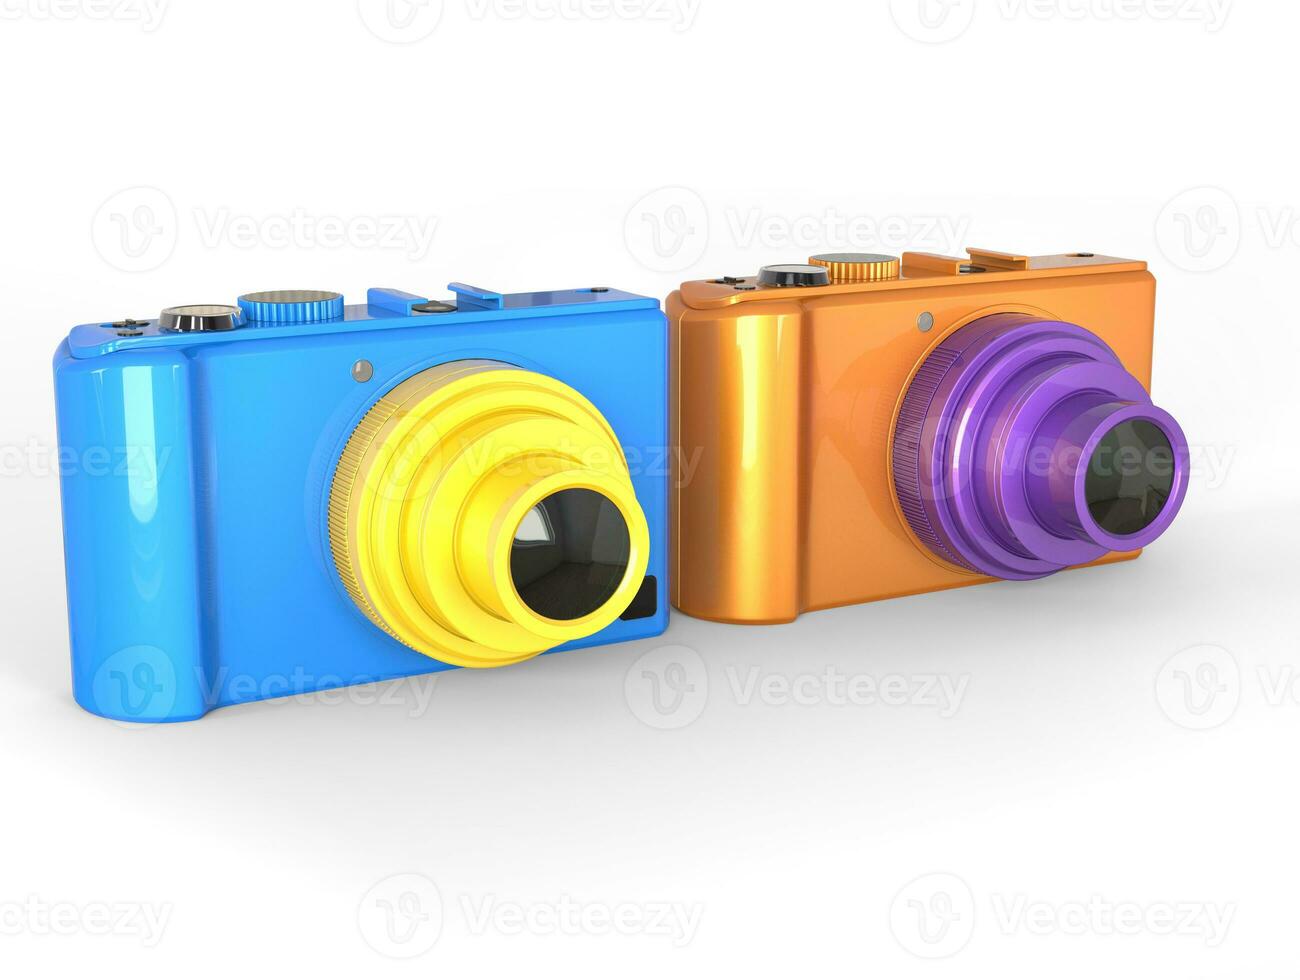 Blue and orange compact digital photo cameras